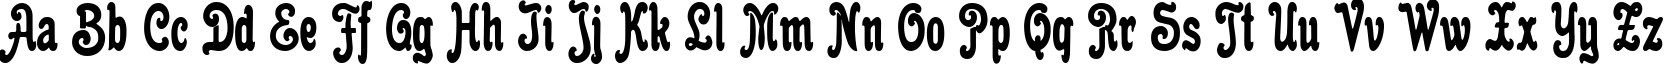 Пример написания английского алфавита шрифтом Anfisa Grotesk